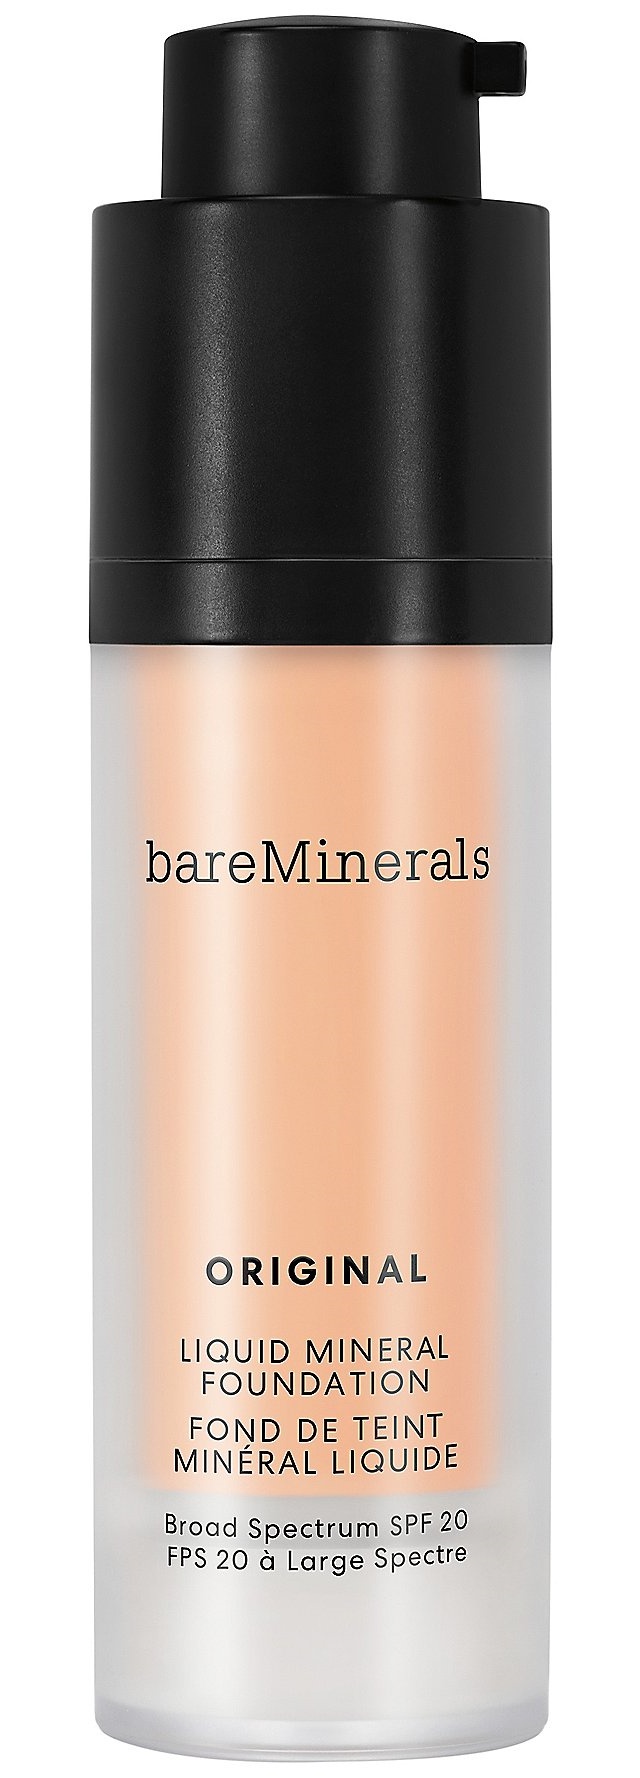 bareMinerals Original Liquid Mineral Foundation Broad Spectrum SPF 20